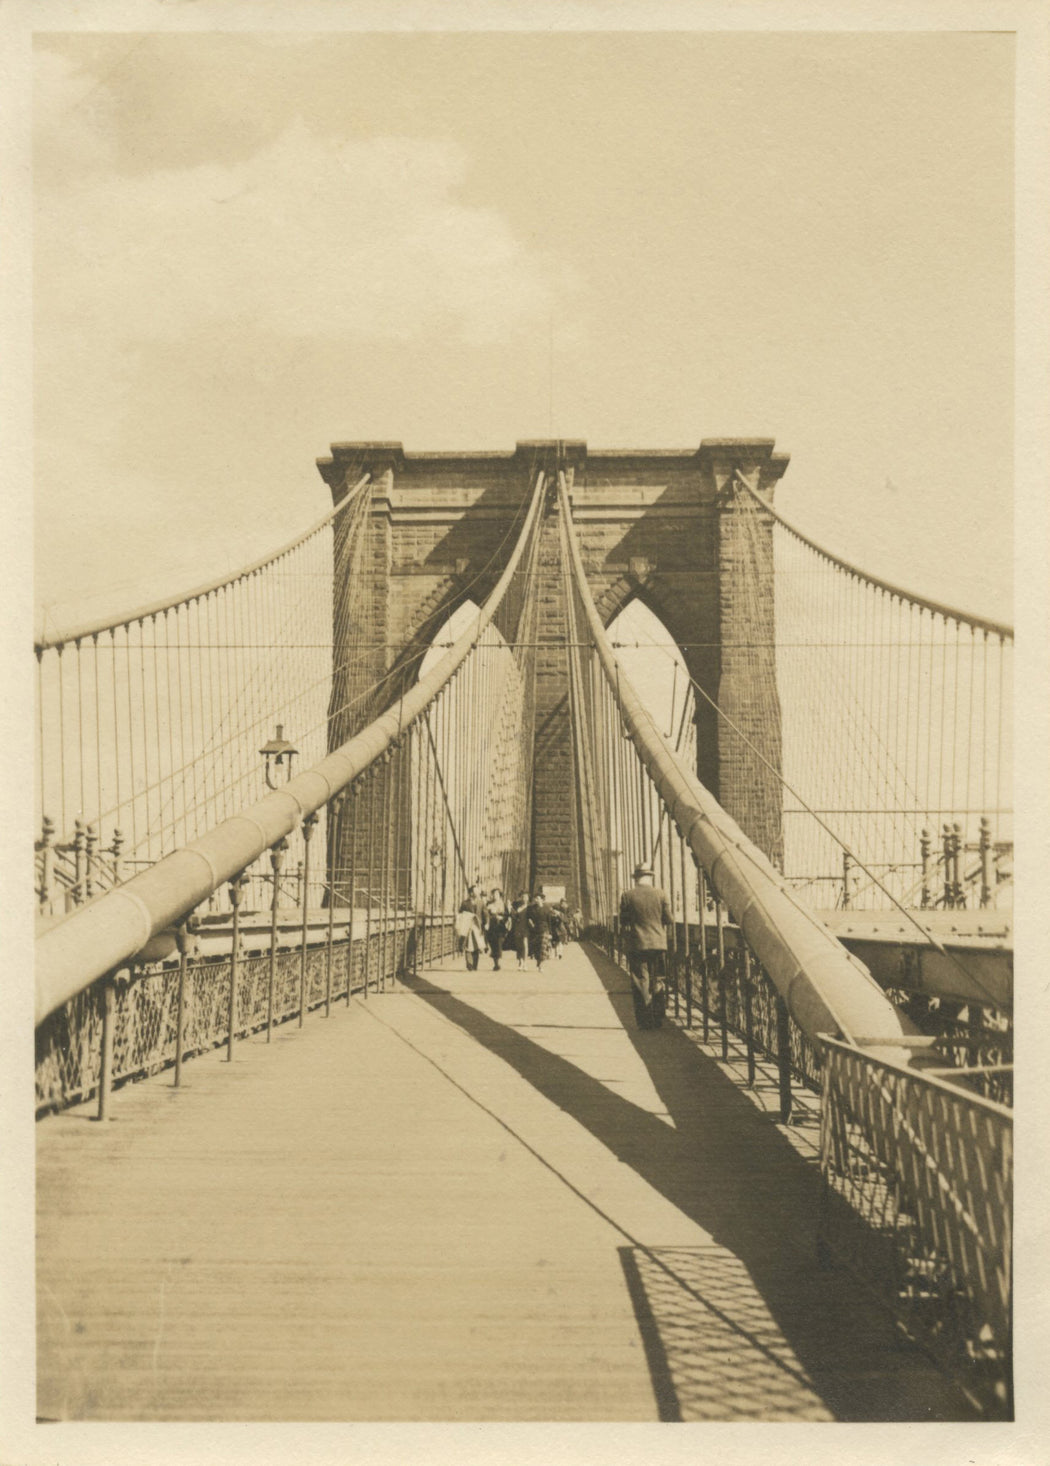 Brooklyn Bridge Pylons from further away